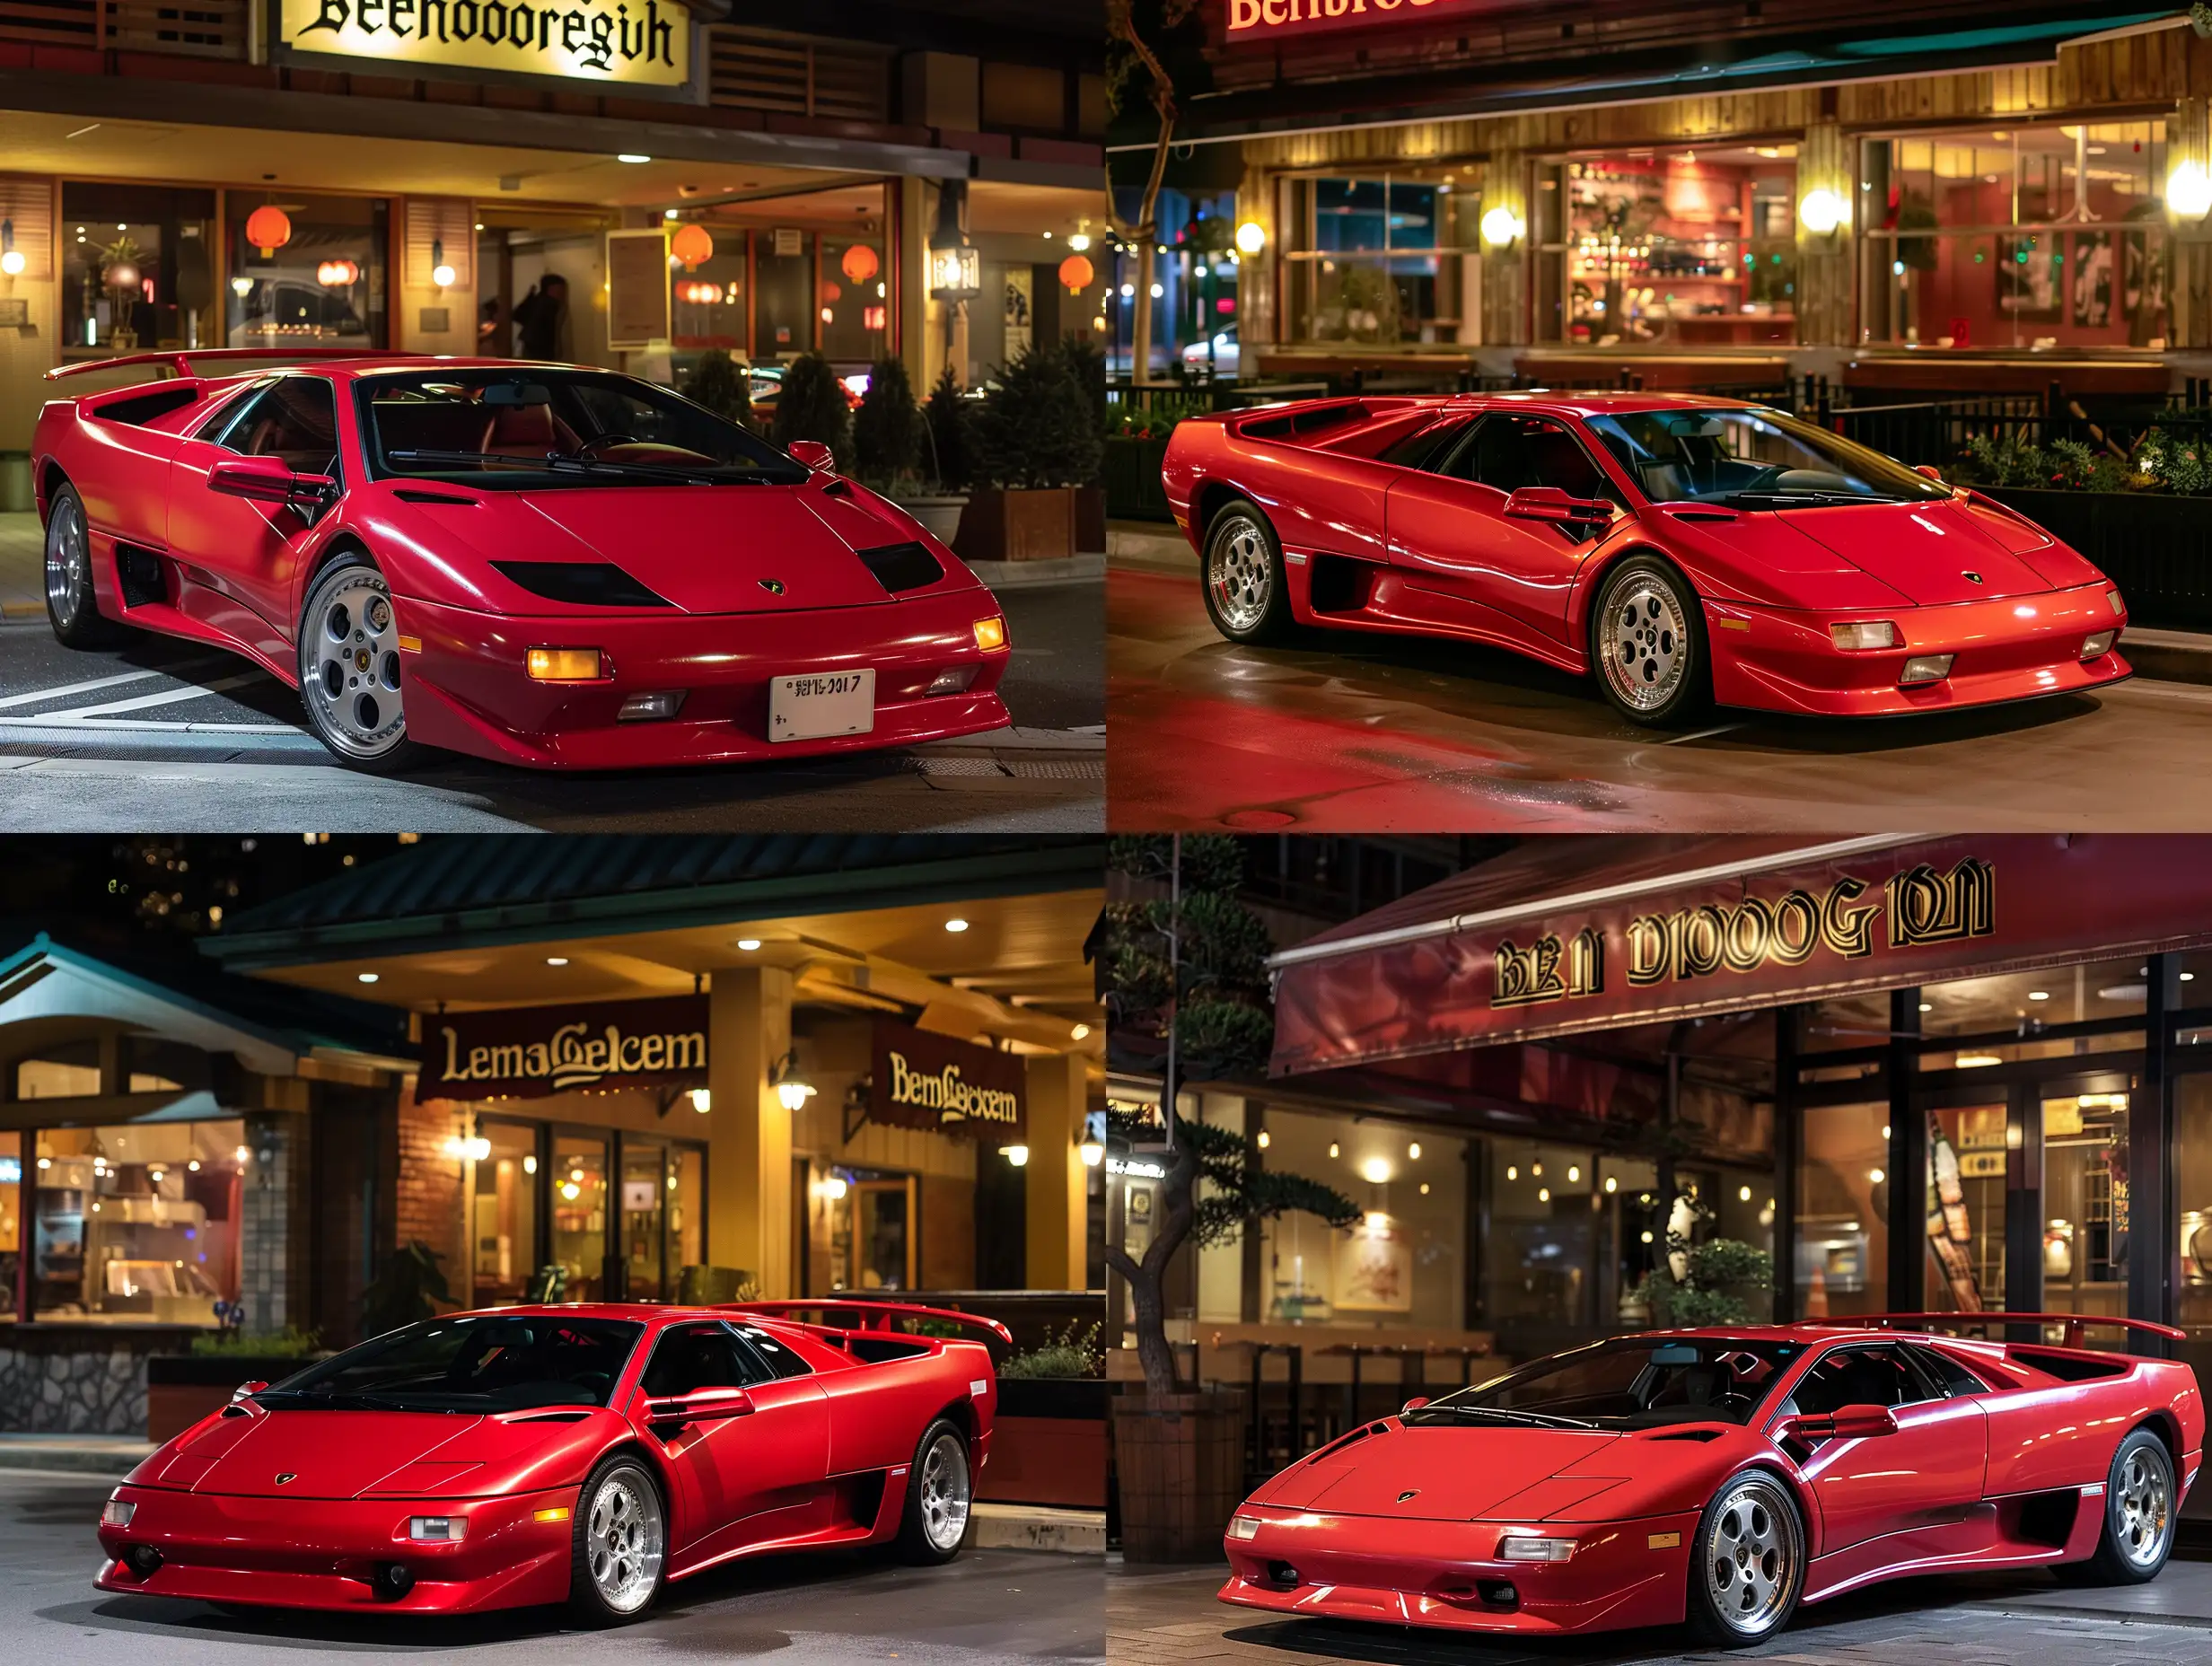 Sleek-Red-Lamborghini-Diablo-Night-Scene-at-Benihana